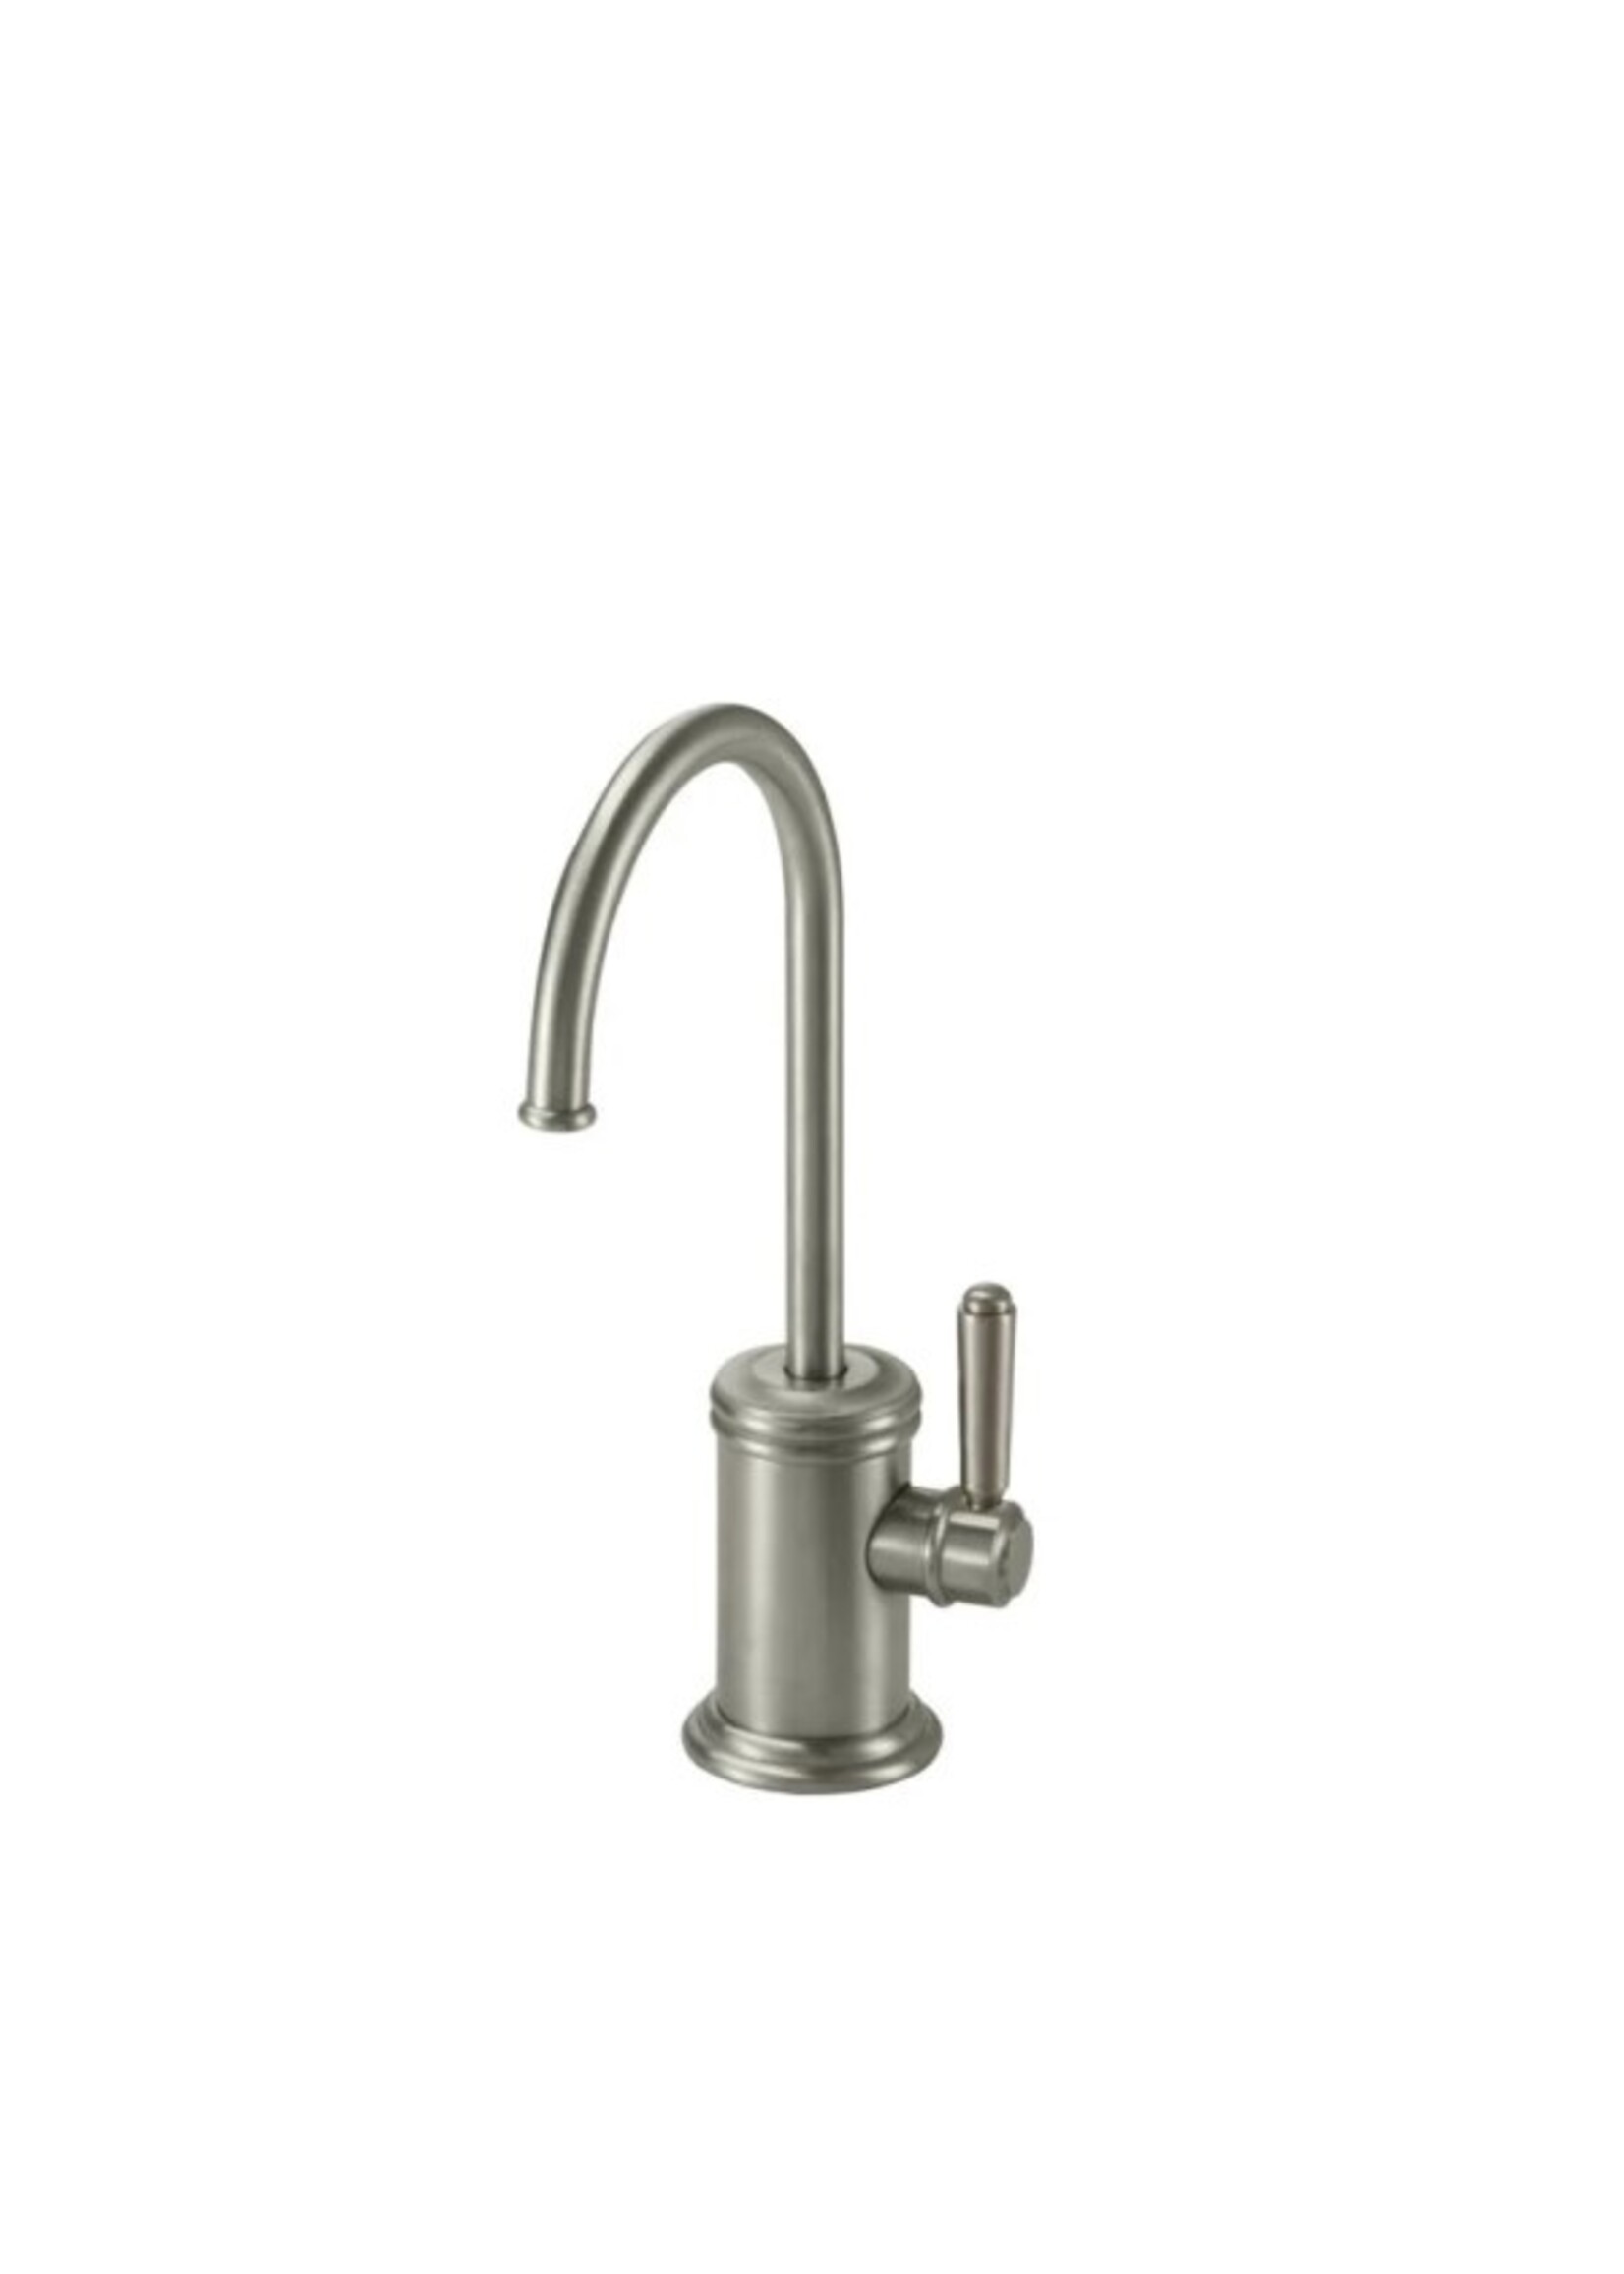 California Faucets California Faucets Davoli Cold Water Dispenser - Custom HDL - Standard Finish